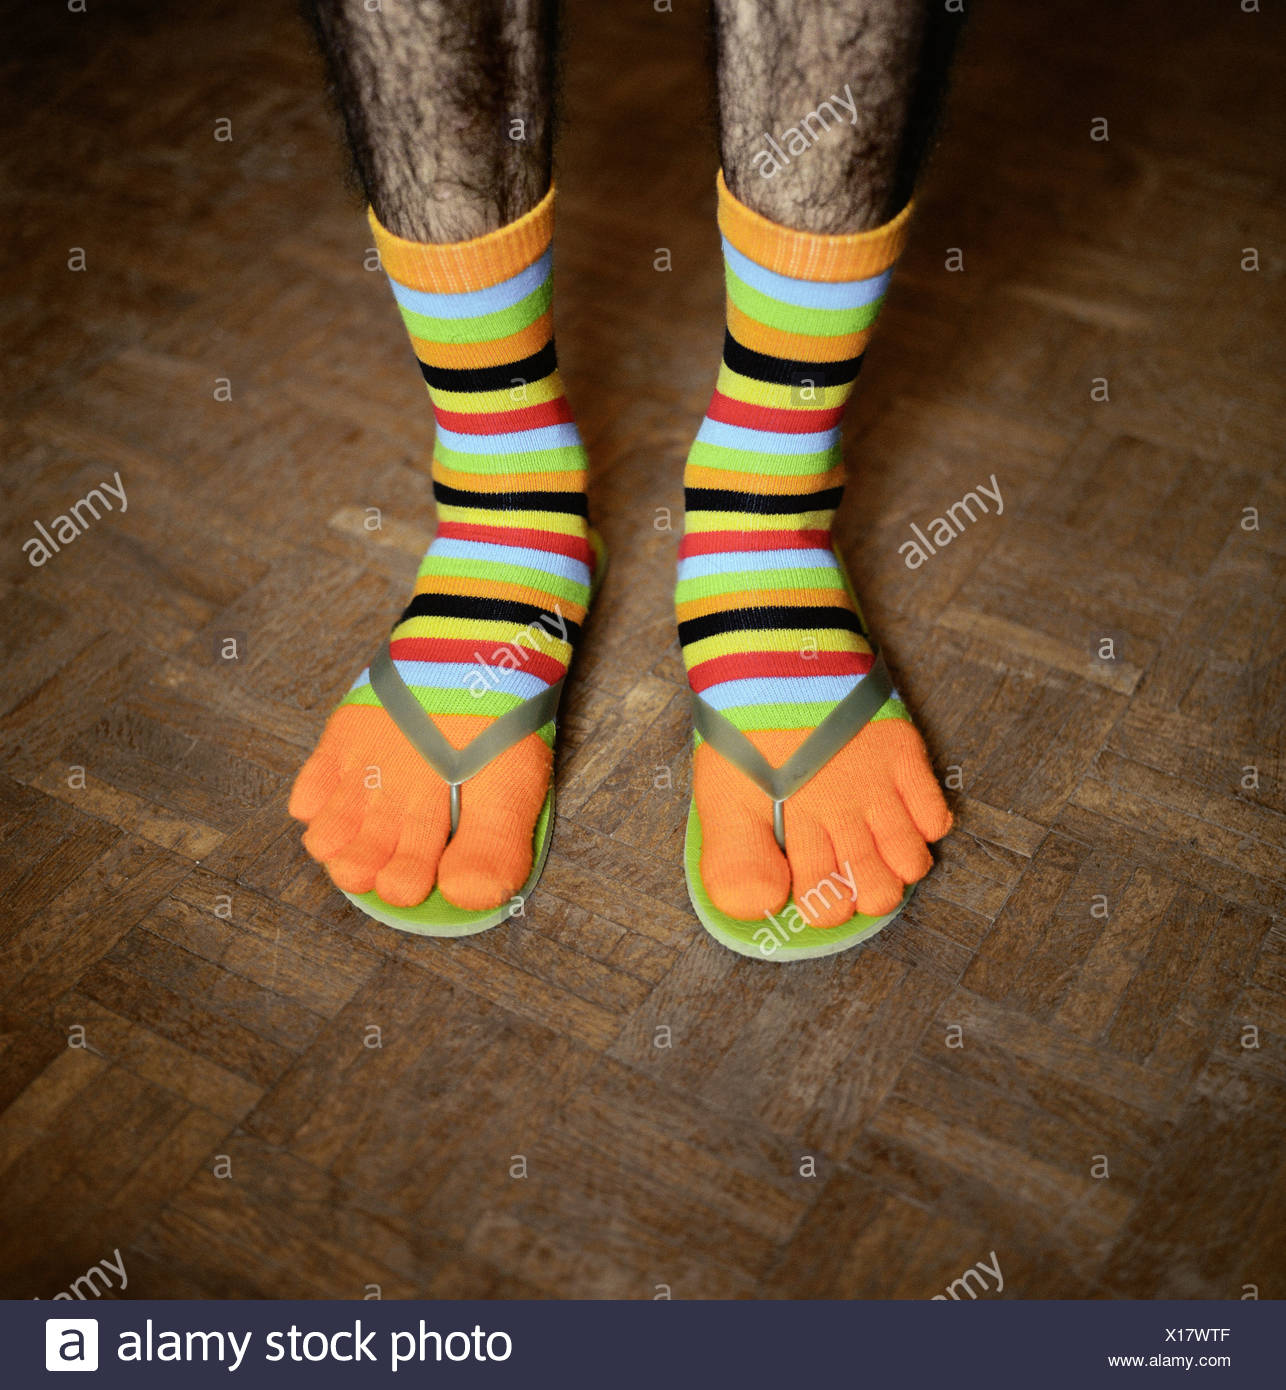 toe socks and flip flops